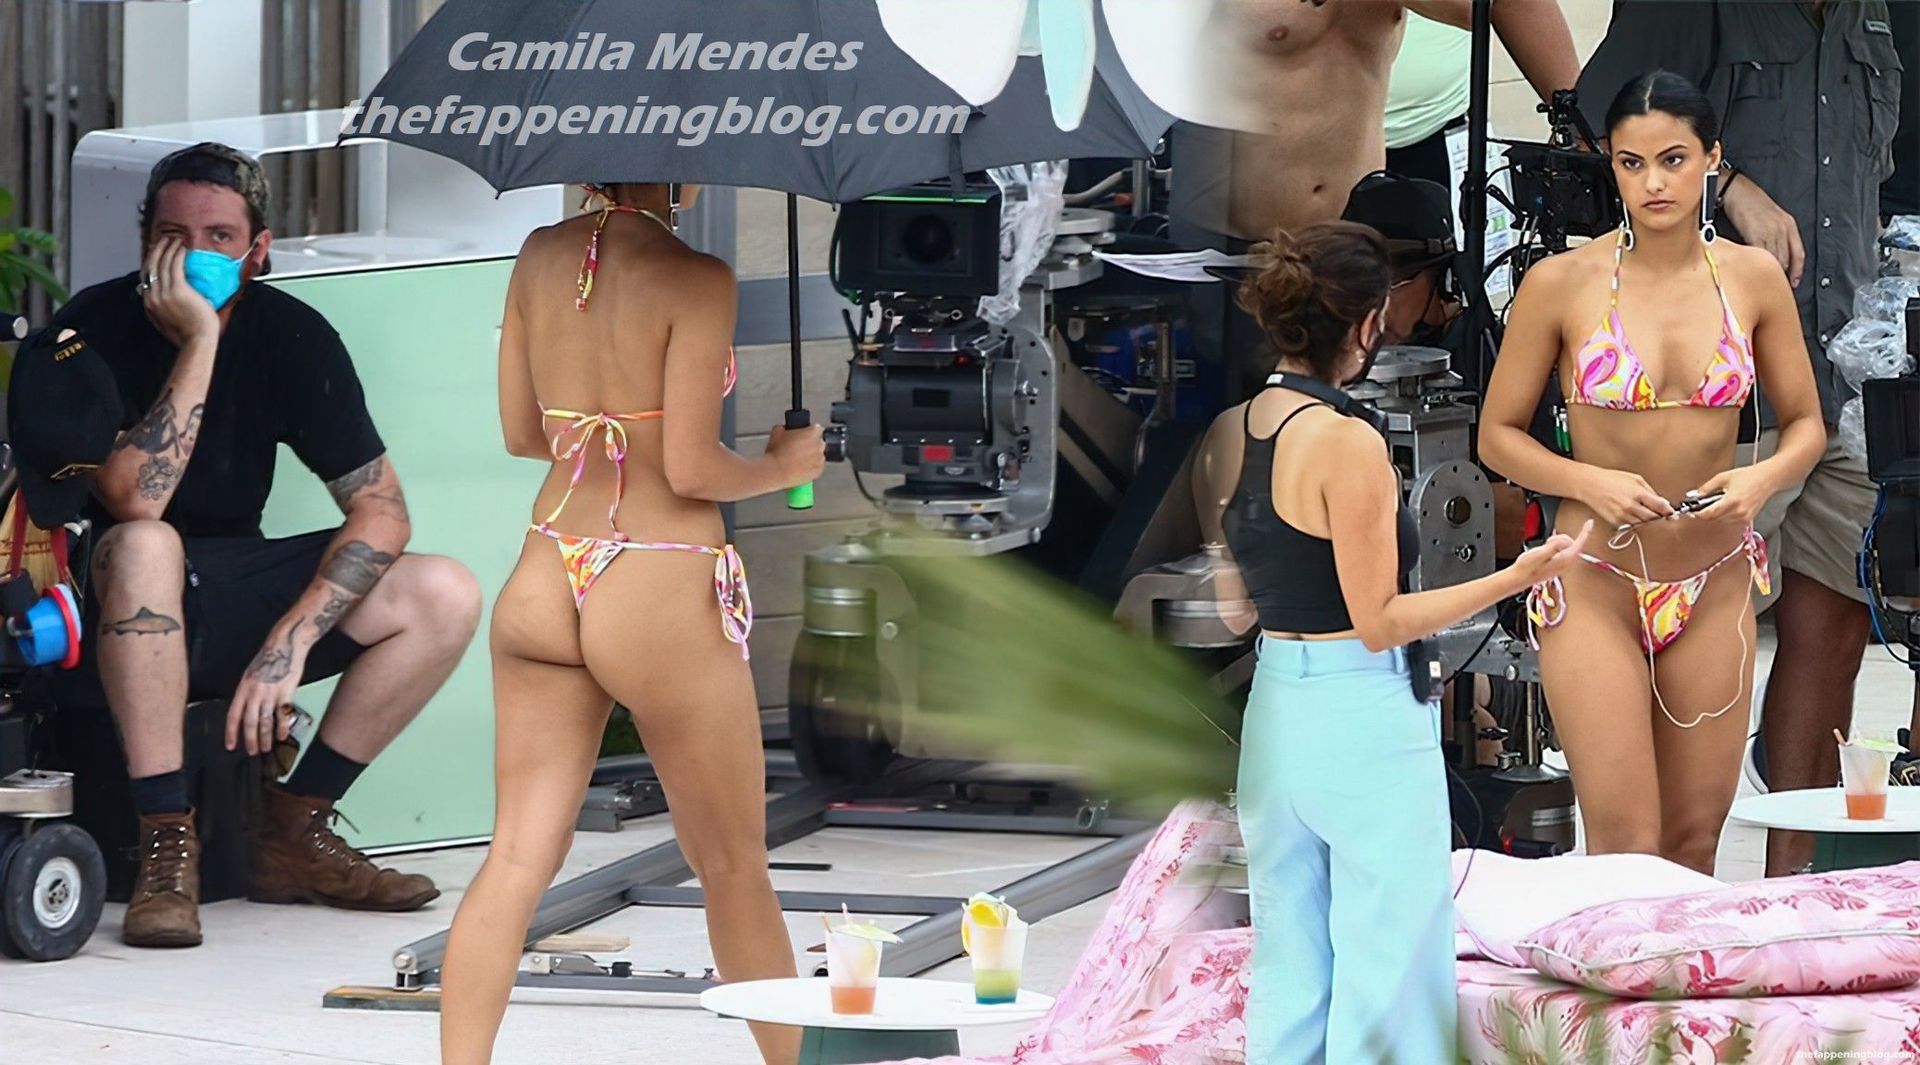 Camila mendes nudes